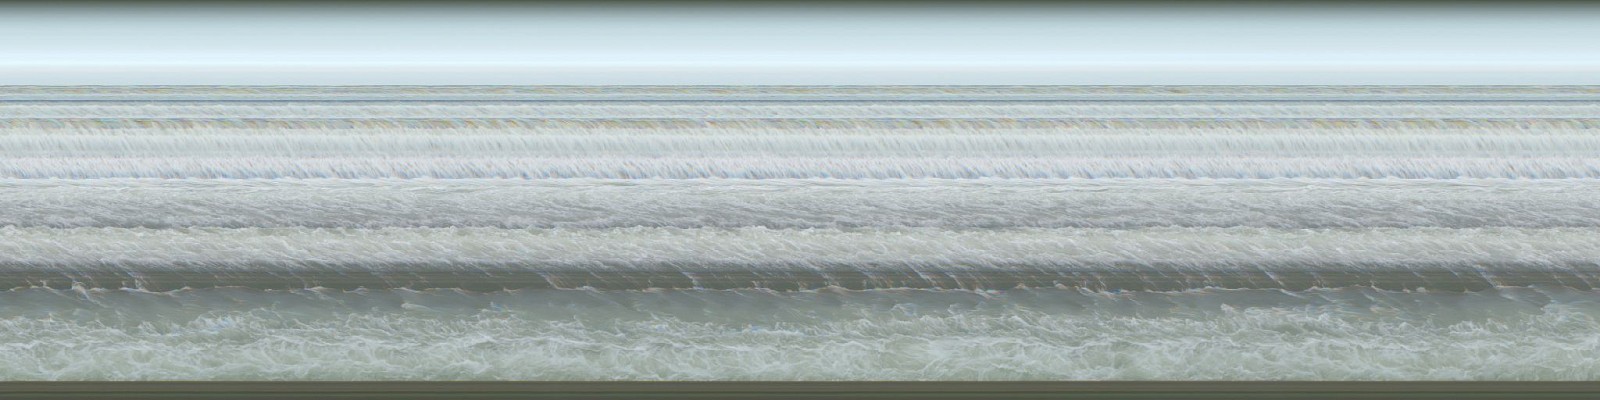 Jay Mark Johnson, GULLFOSS #1, 2021, Gullfoss, Iceland
archival pigment on paper, mounted on aluminum, 40 x 160 in. (101.6 x 406.4 cm)